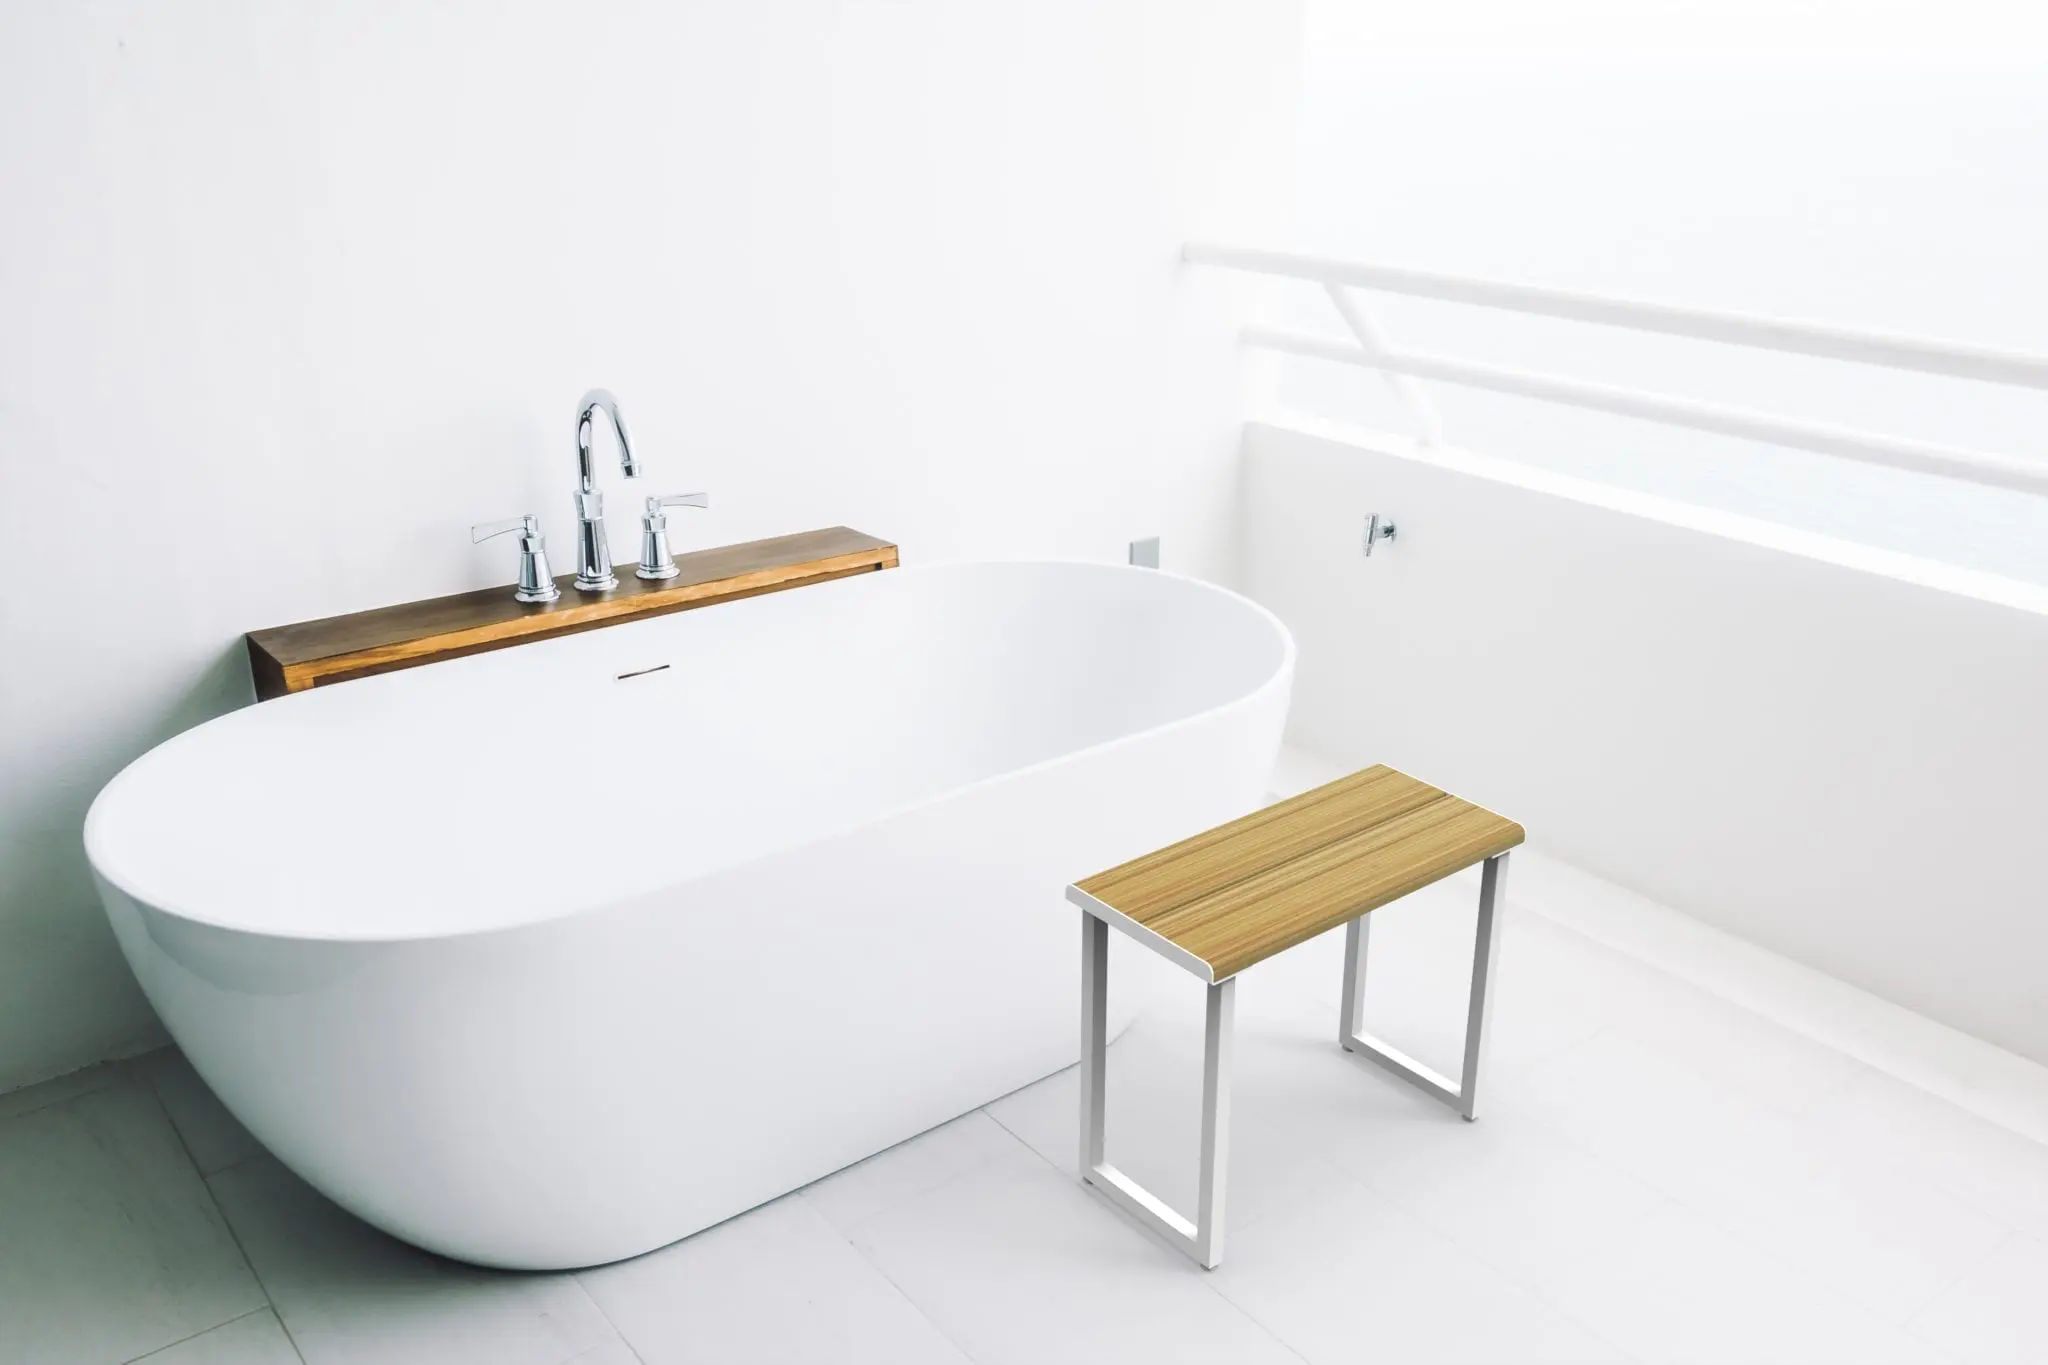 Invisia Shower Bench beside a beautiful freestanding bathtub